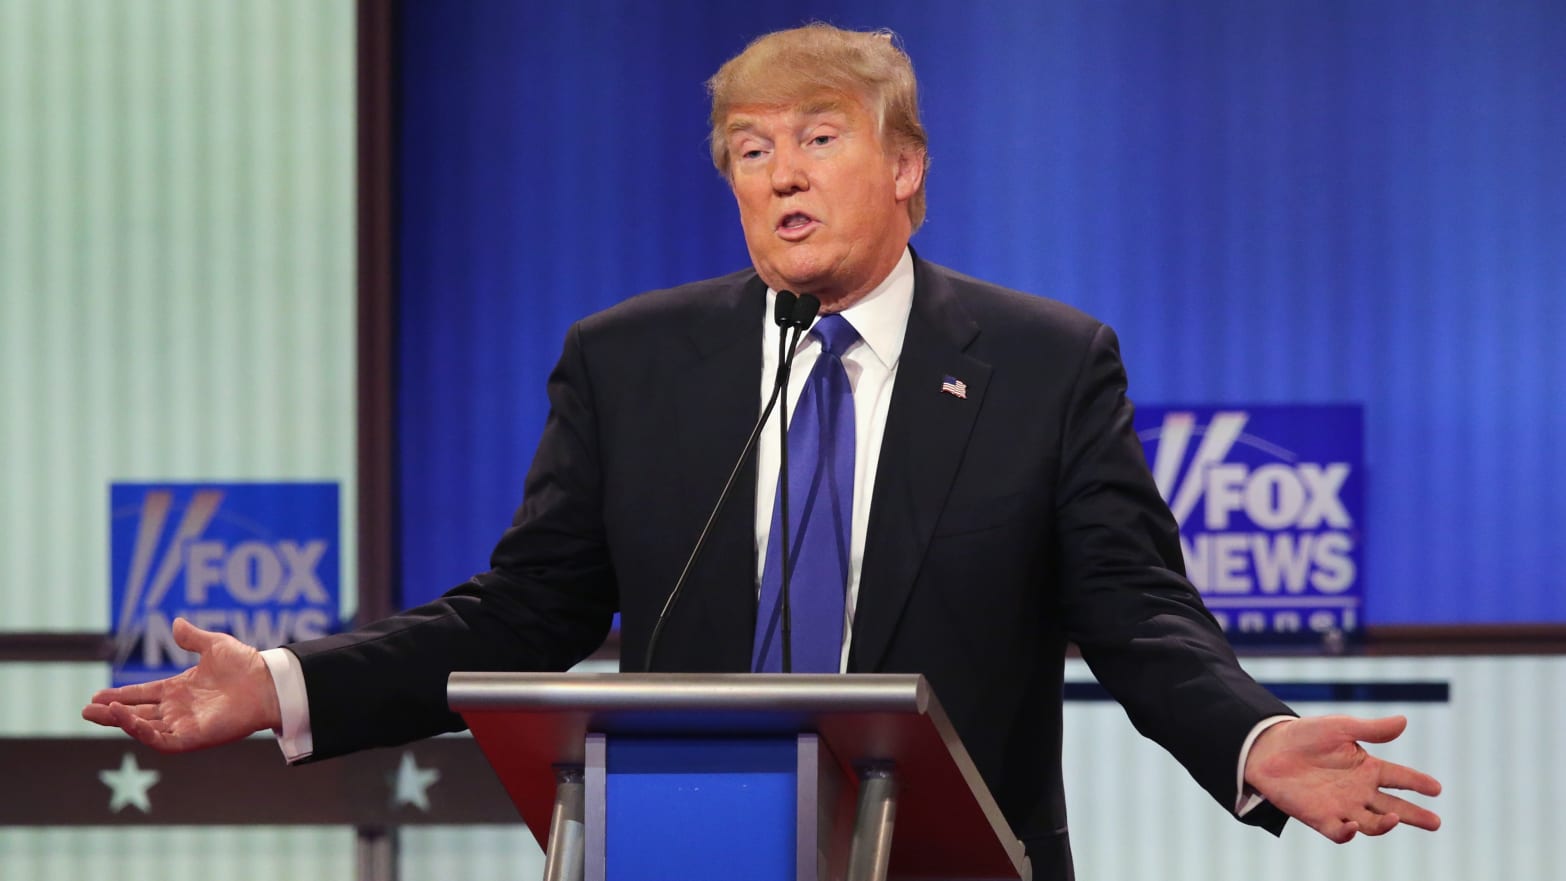 Republican presidential candidate Donald Trump participates in a 2016 debate sponsored by Fox News